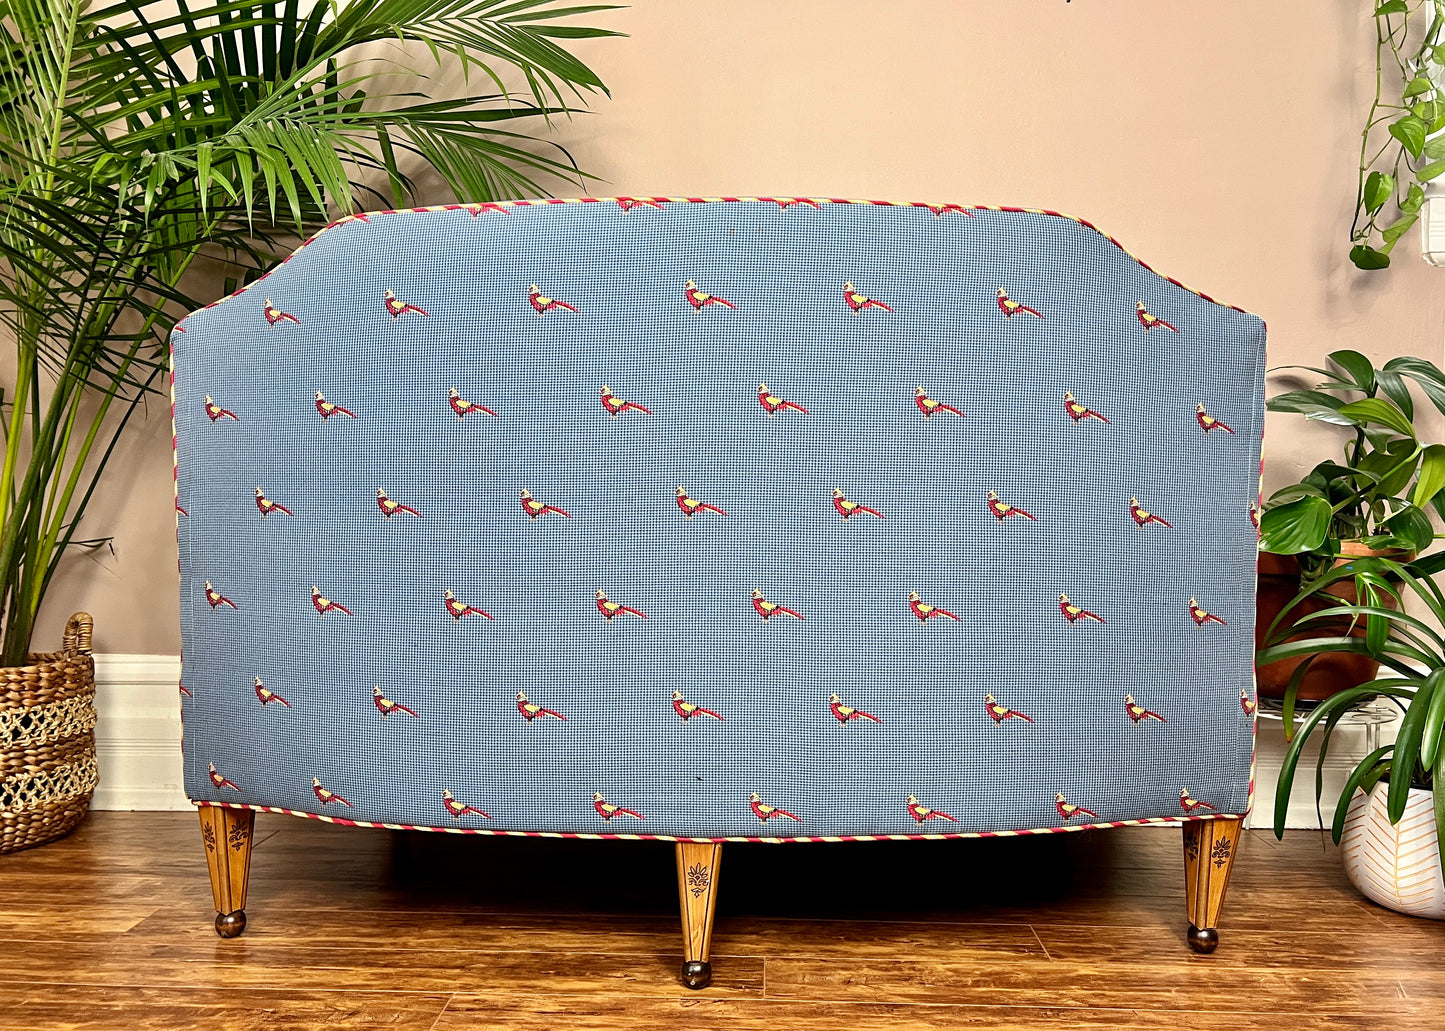 The Red Pheasant Sofa